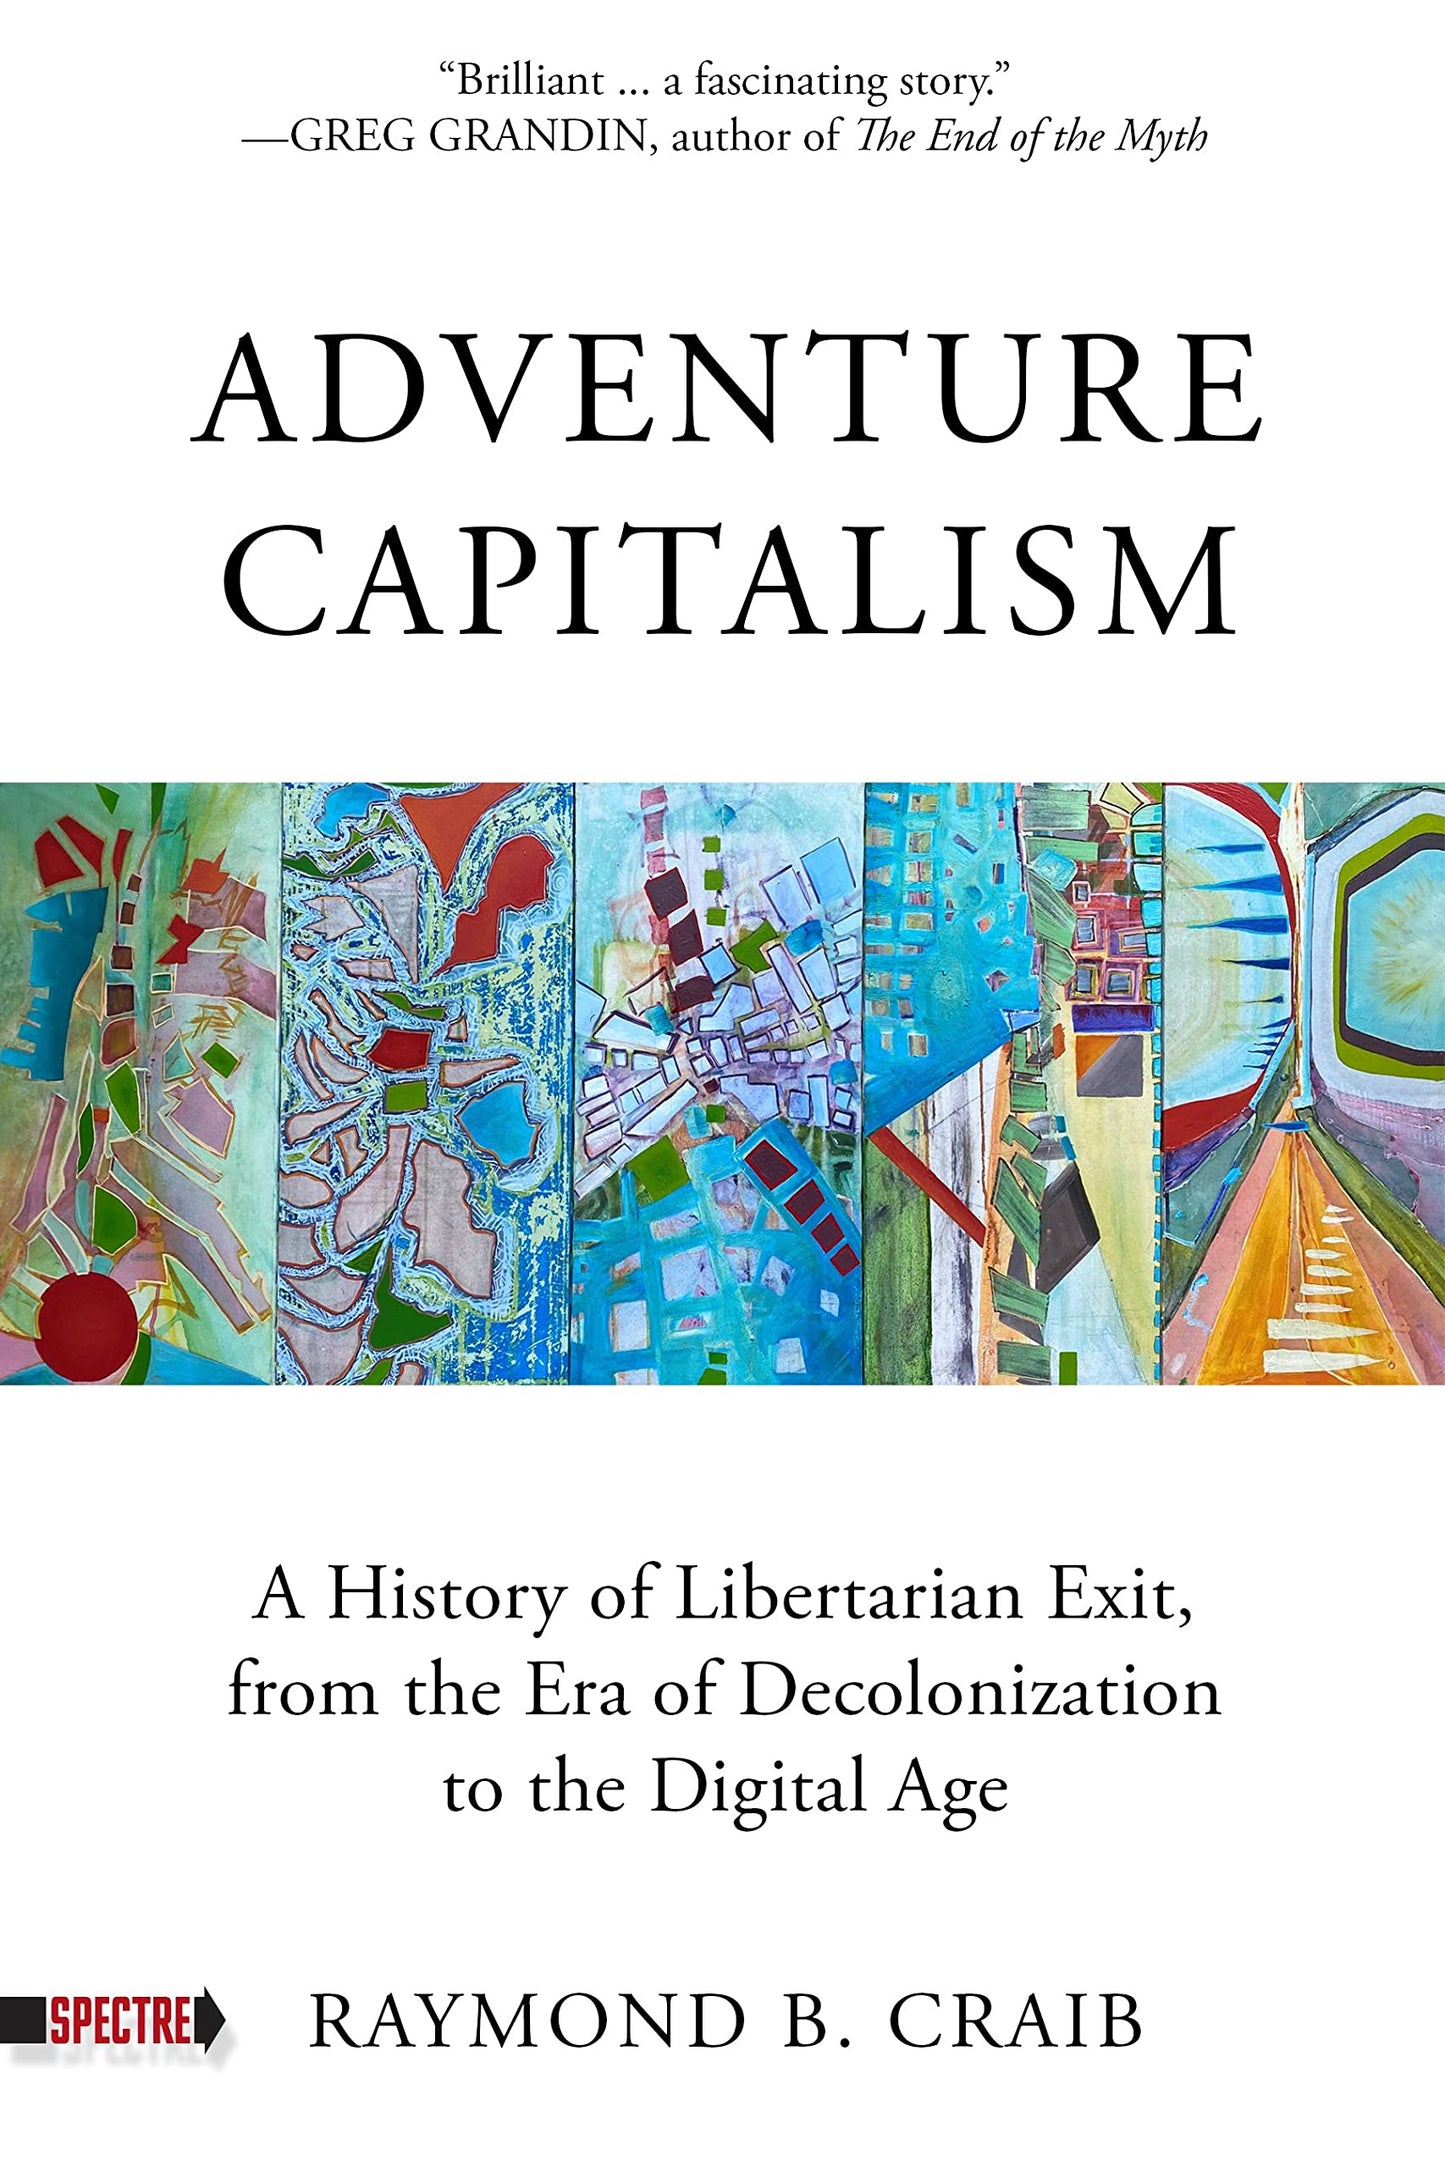 Adventure Capitalism, by Raymond B. Craib